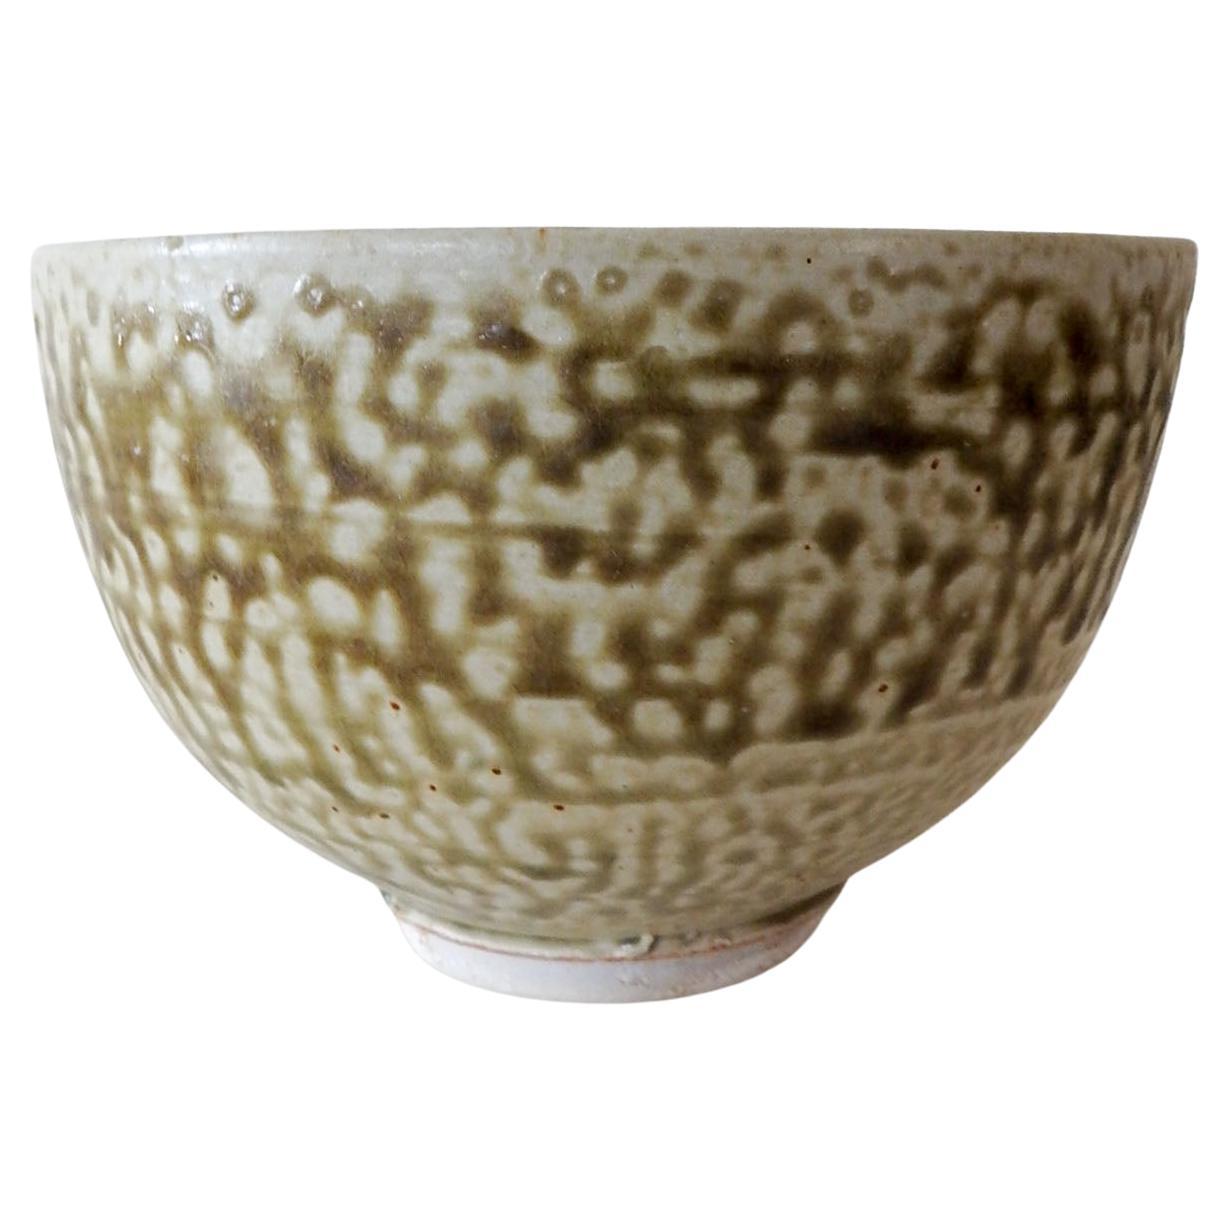 Late 20th Century Green Salt Glaze Pottery Bowl